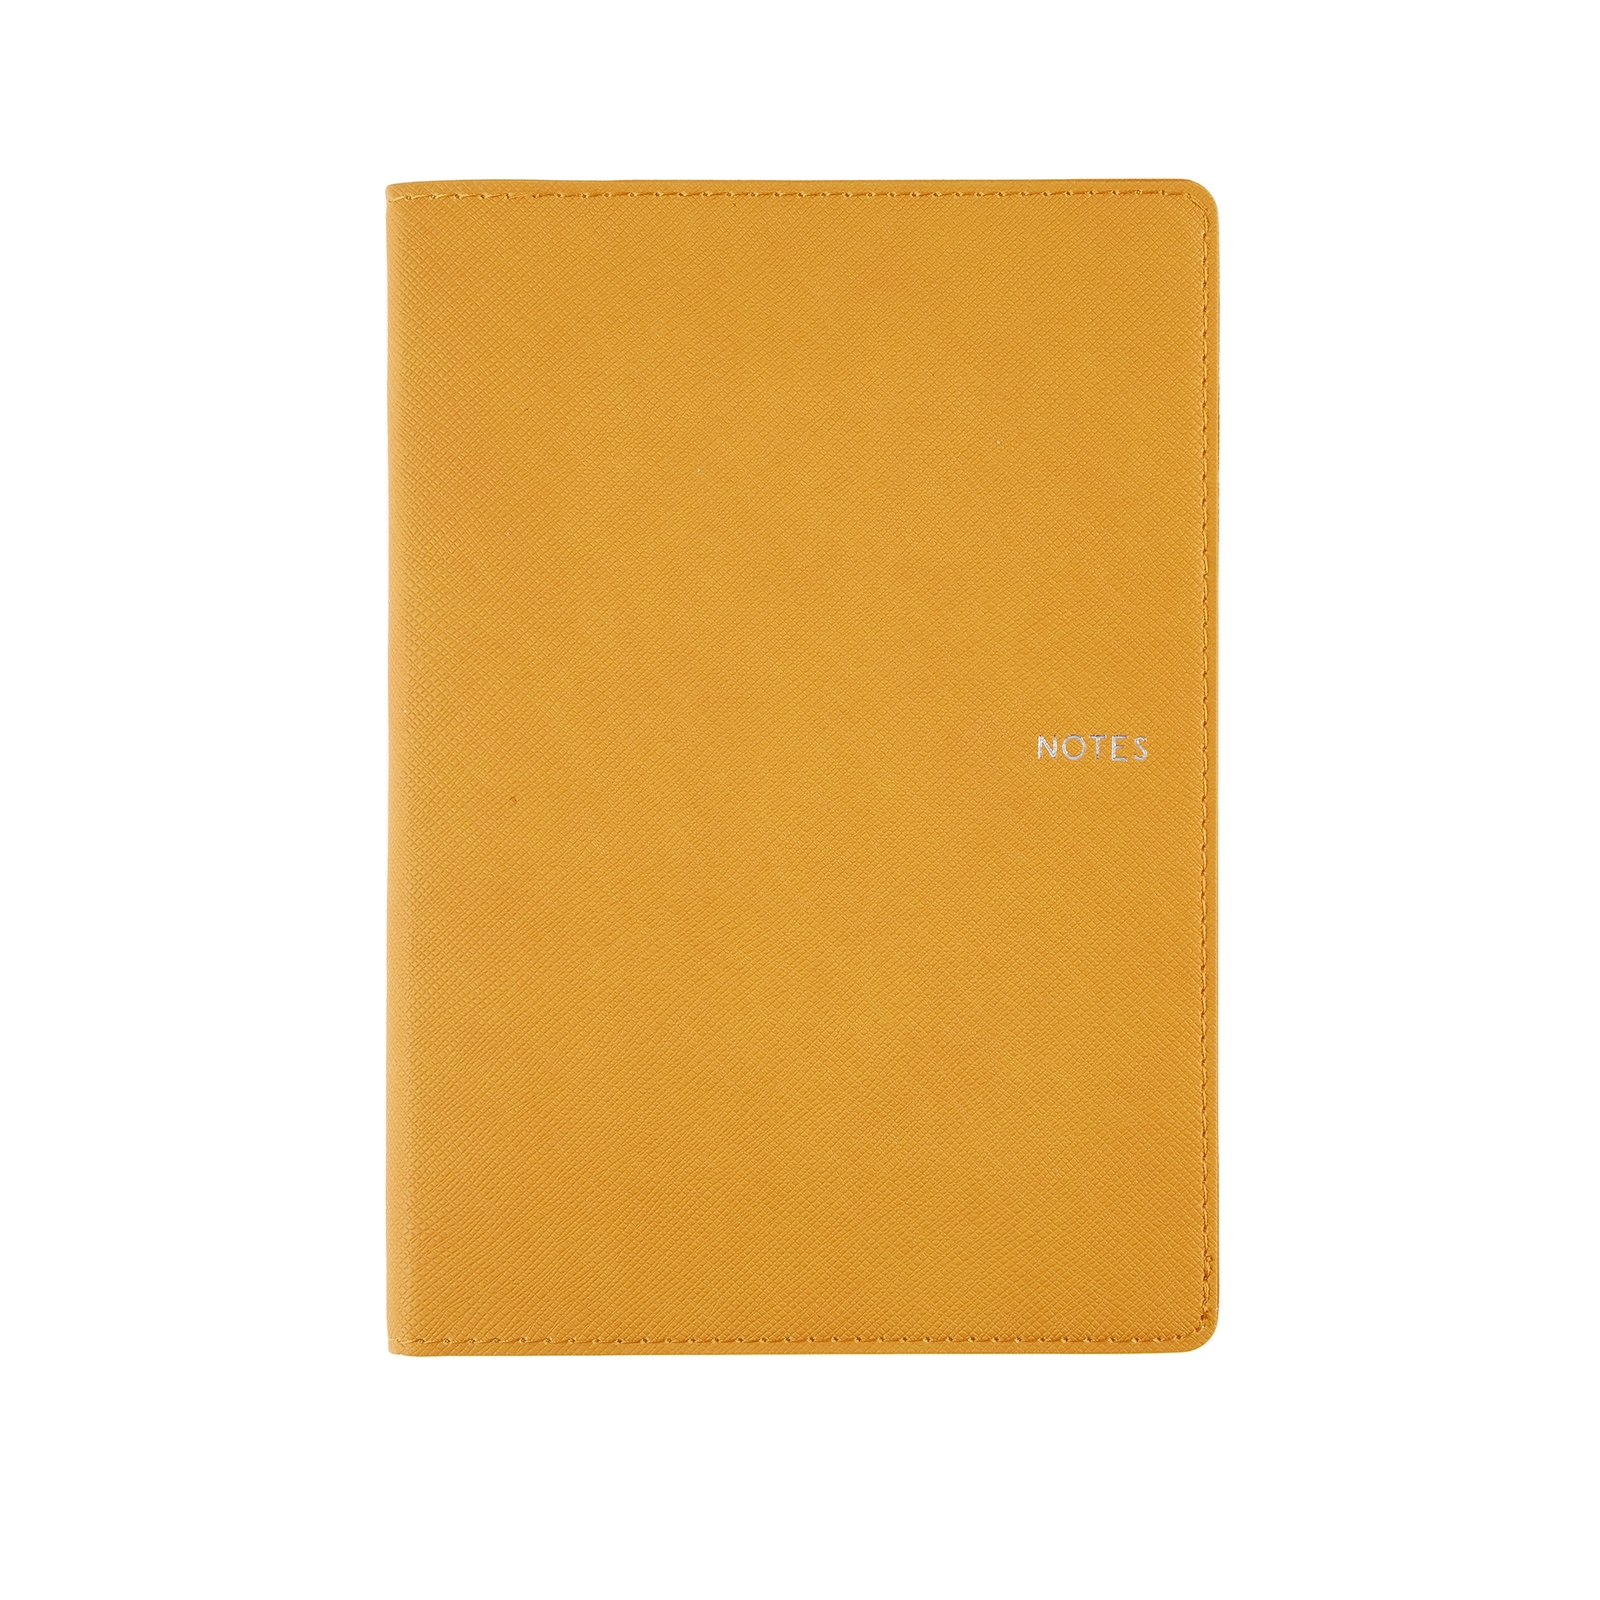 Collins B6 Ruled Notebook - Mustard